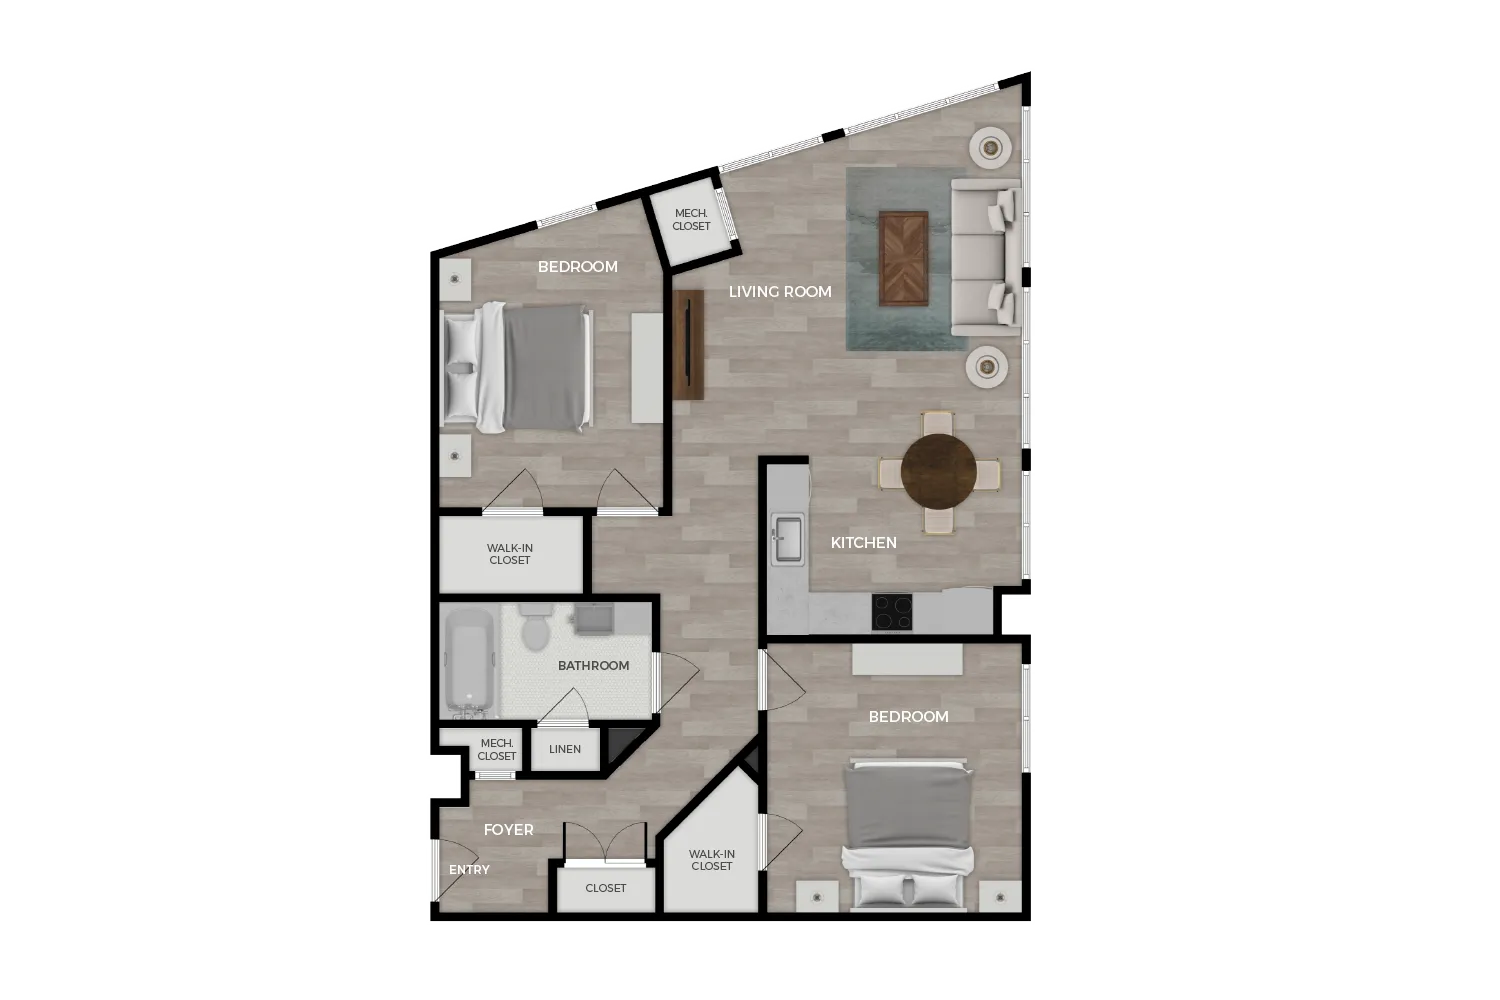 Floor plan rendering of "The Monument" 2-bedroom unit